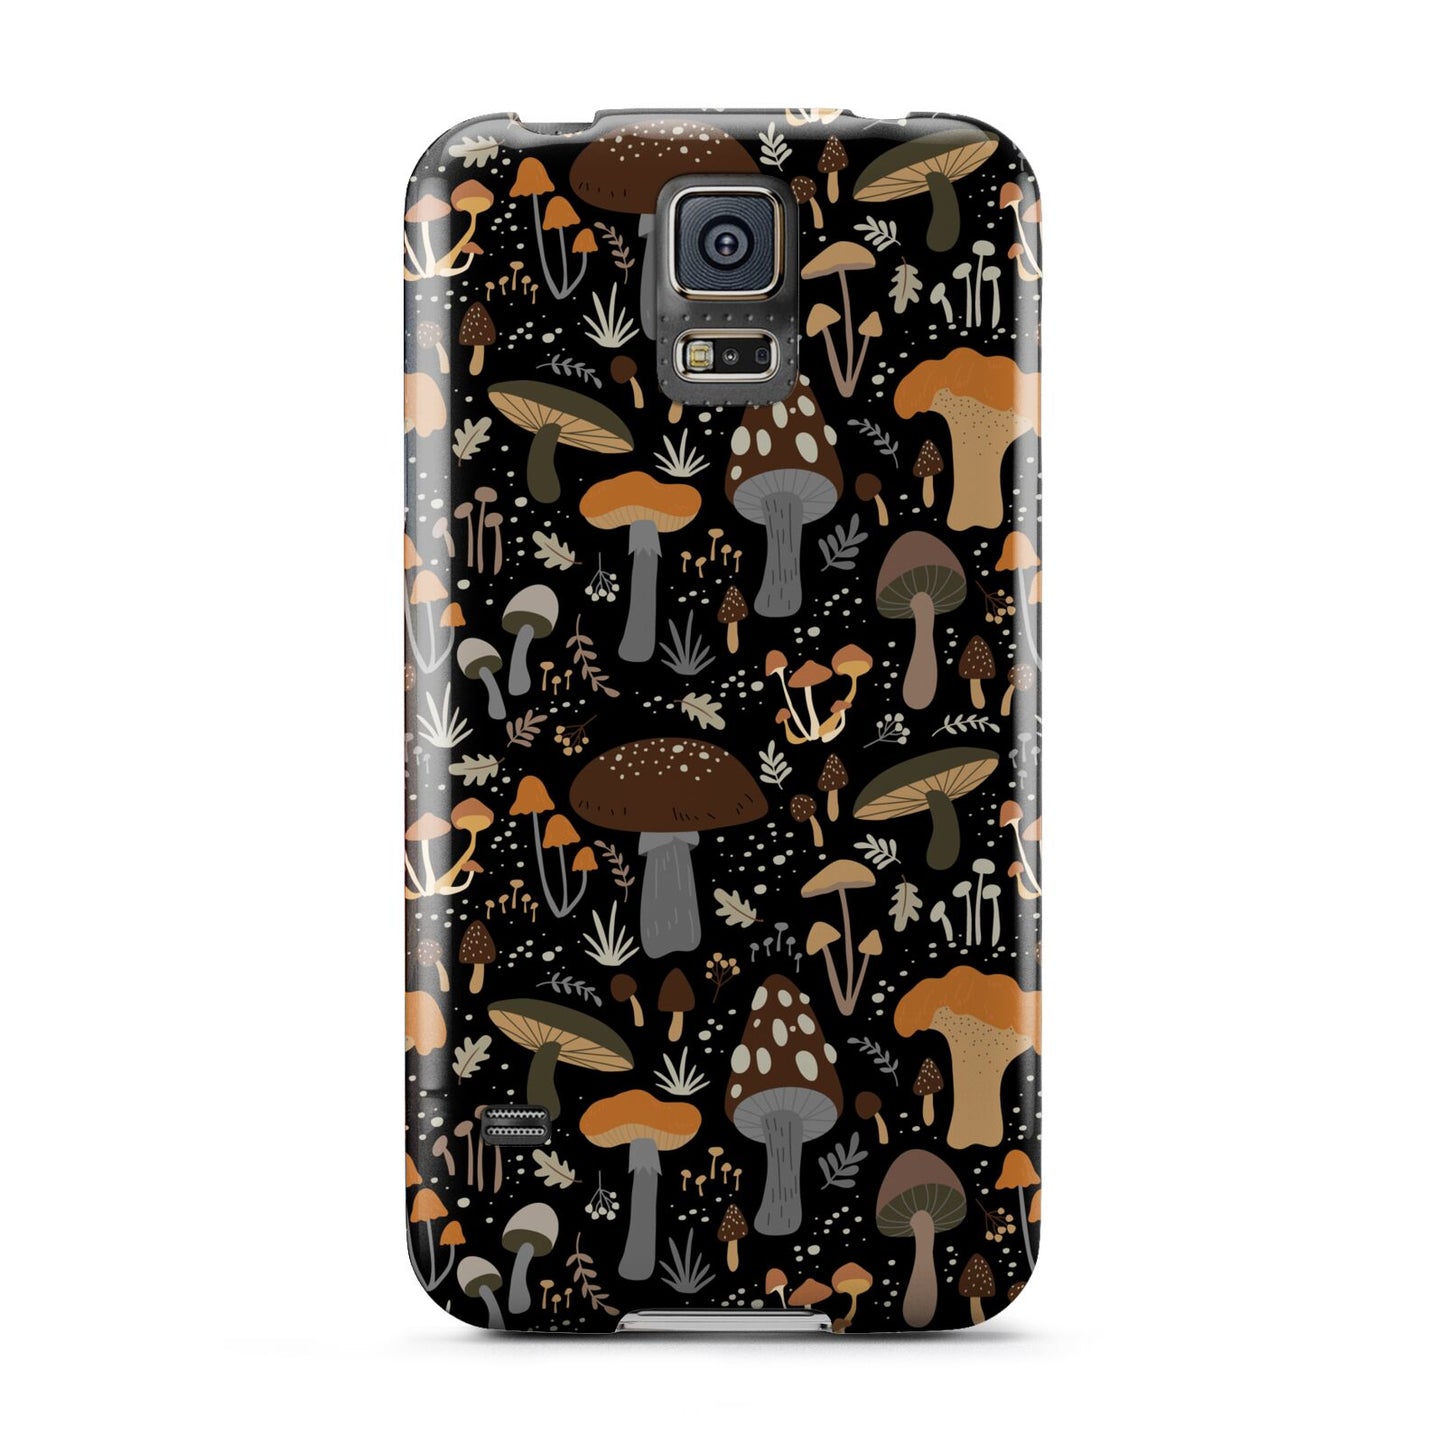 Mushroom Samsung Galaxy S5 Case